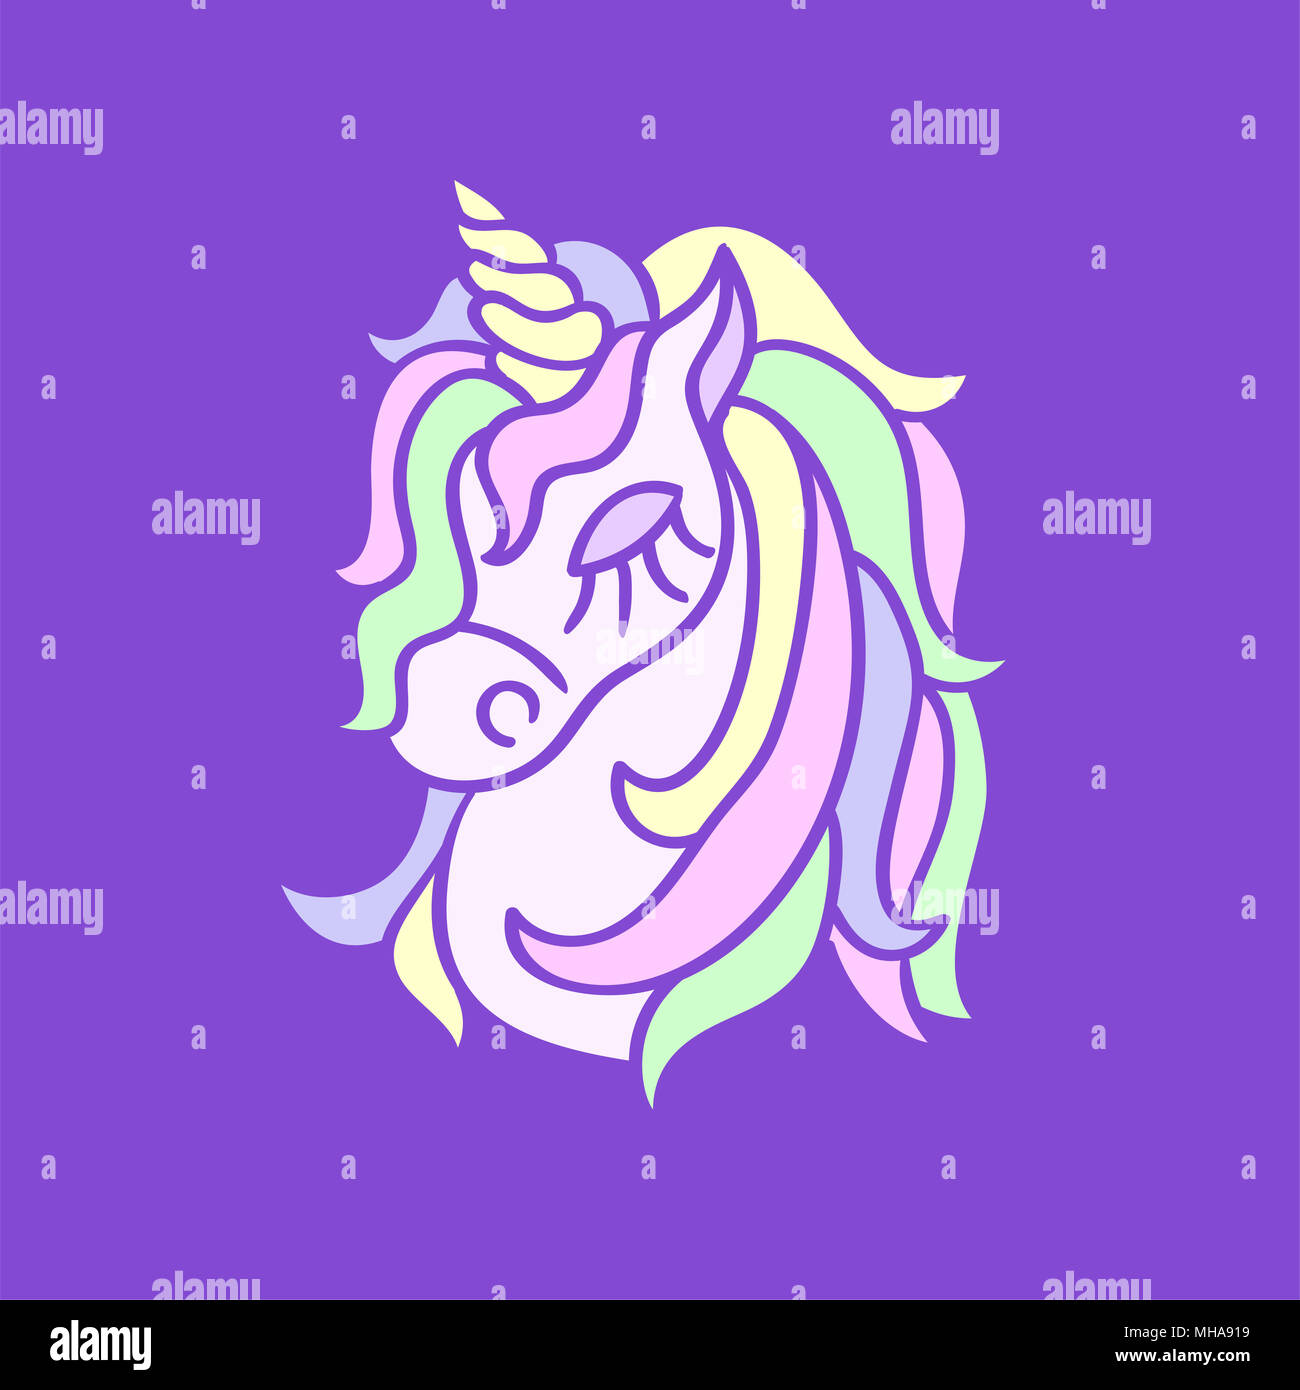 Magic unicorn head icon on the purple background Stock Photo